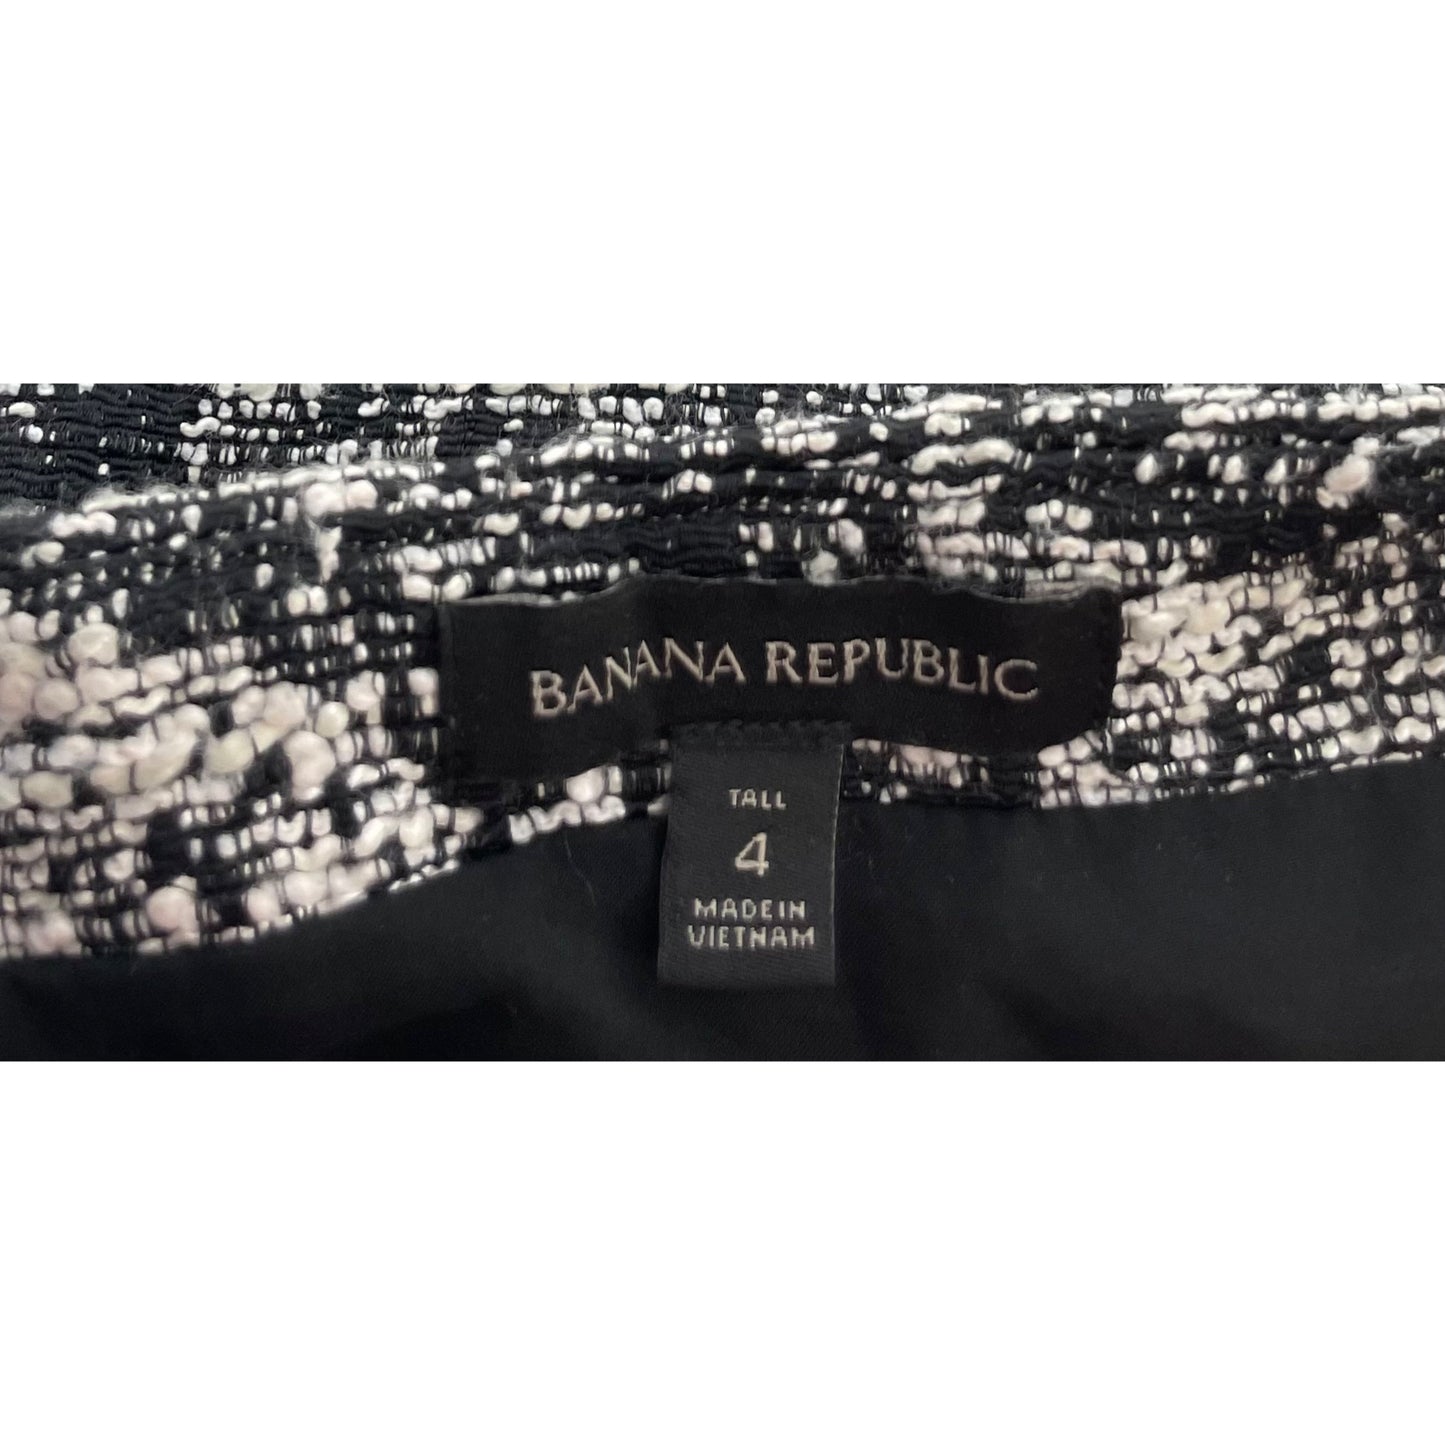 Banana Republic Women's Size 4 Black & White Long-Sleeved Tweed Top